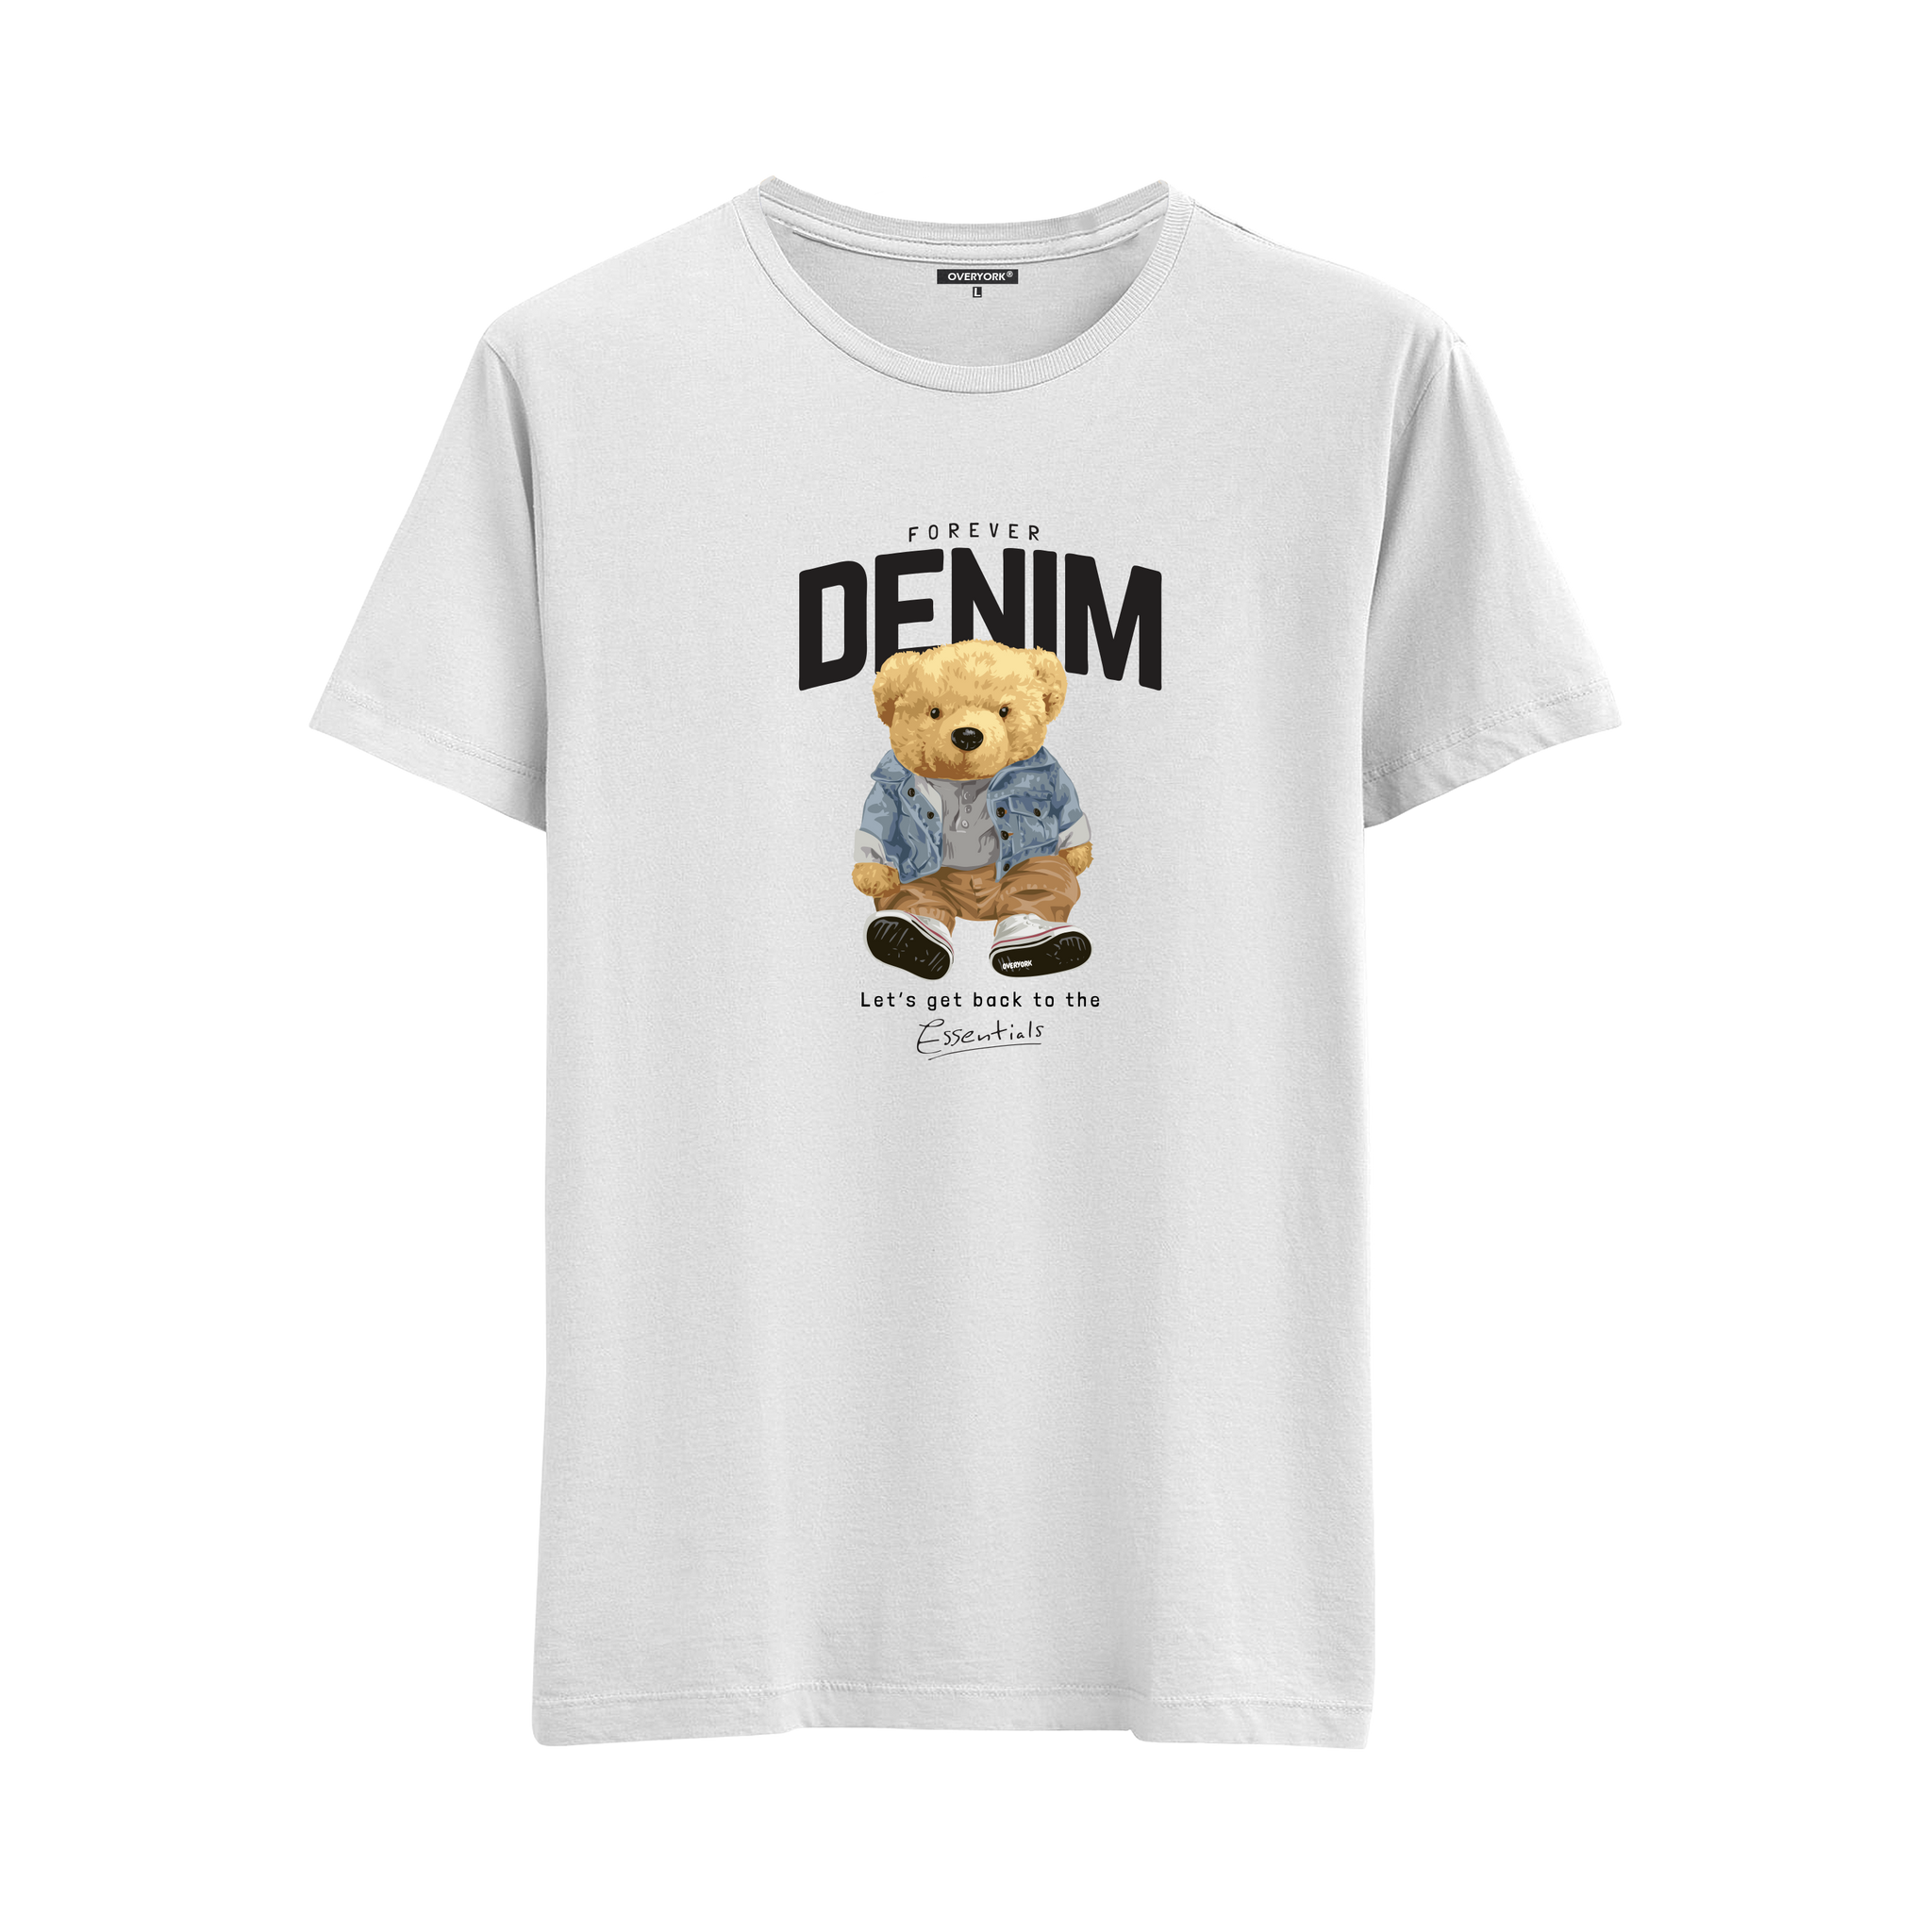 Denim bear - Regular T-Shirt